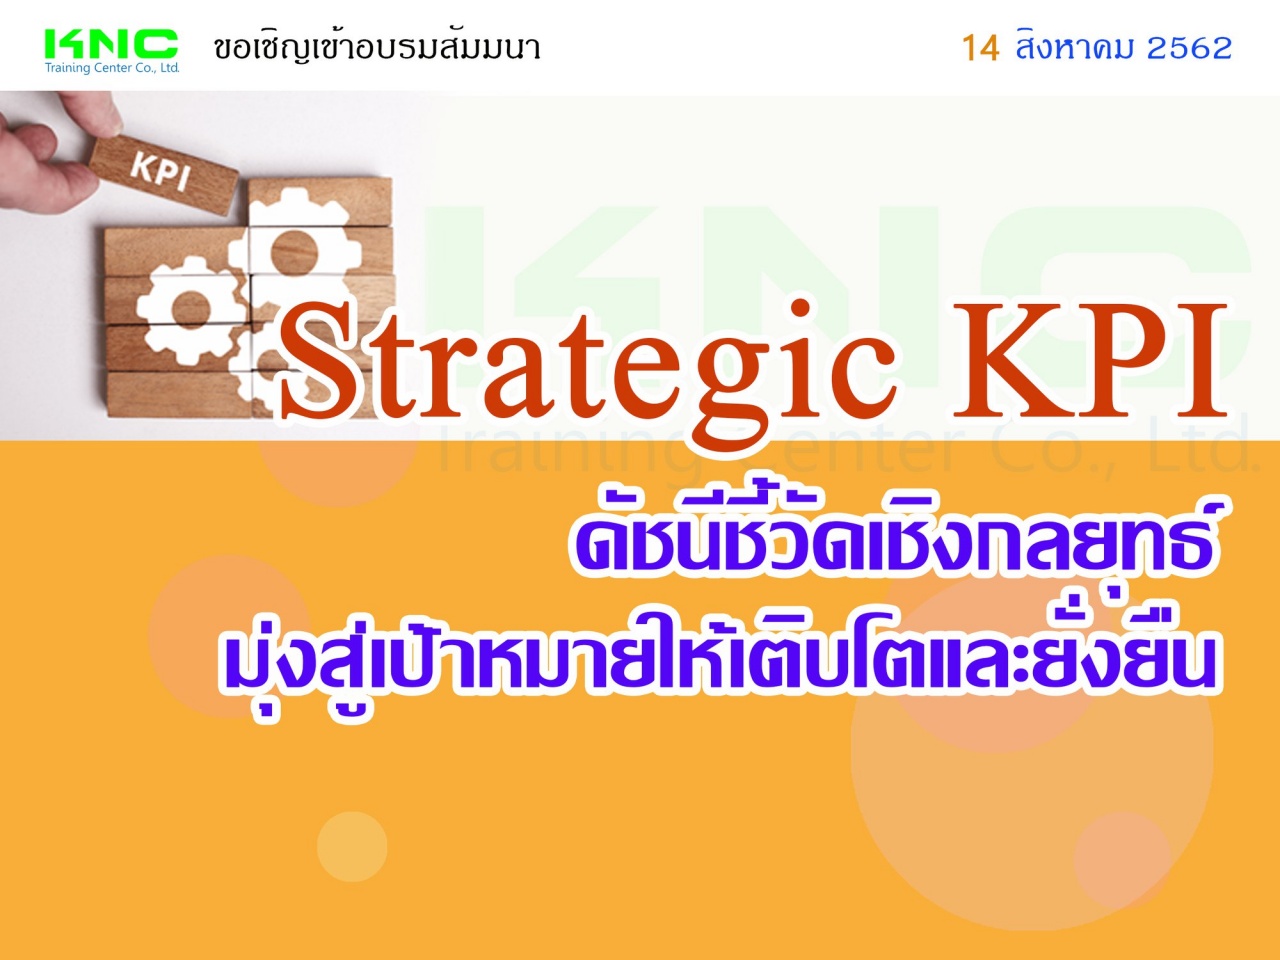 Strategic KPI : ดัชนีชี้วัดเชิงกลยุทธ์มุ่งสู่เป้าหมายให้เติบโตและยั่งยืน